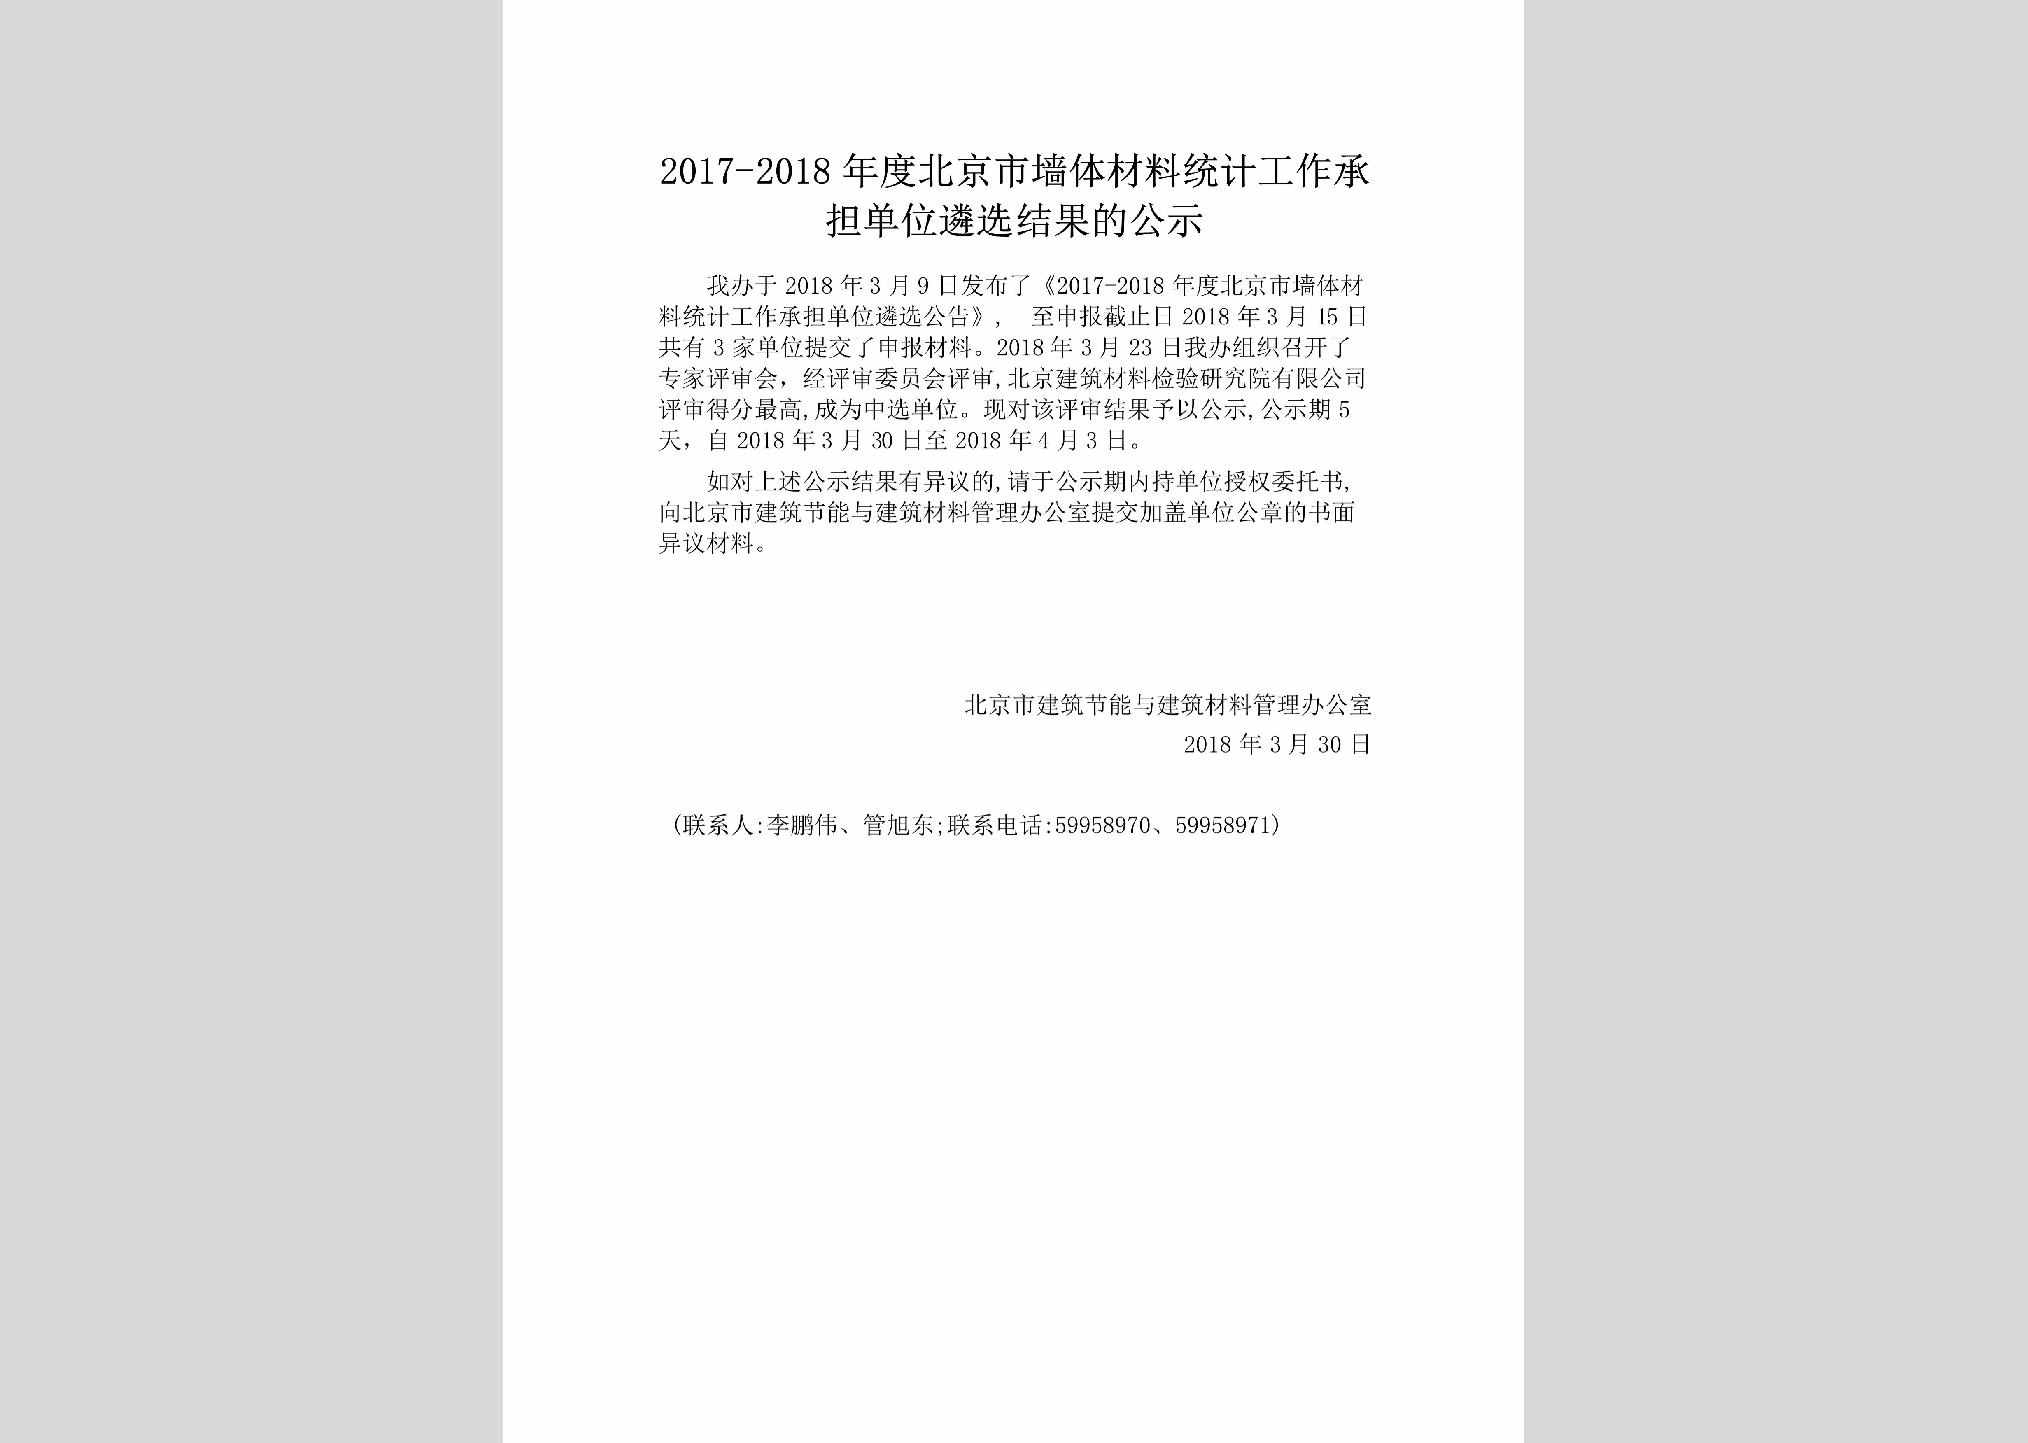 BJ-QTCLLXJG-2018：2017-2018年度北京市墙体材料统计工作承担单位遴选结果的公示